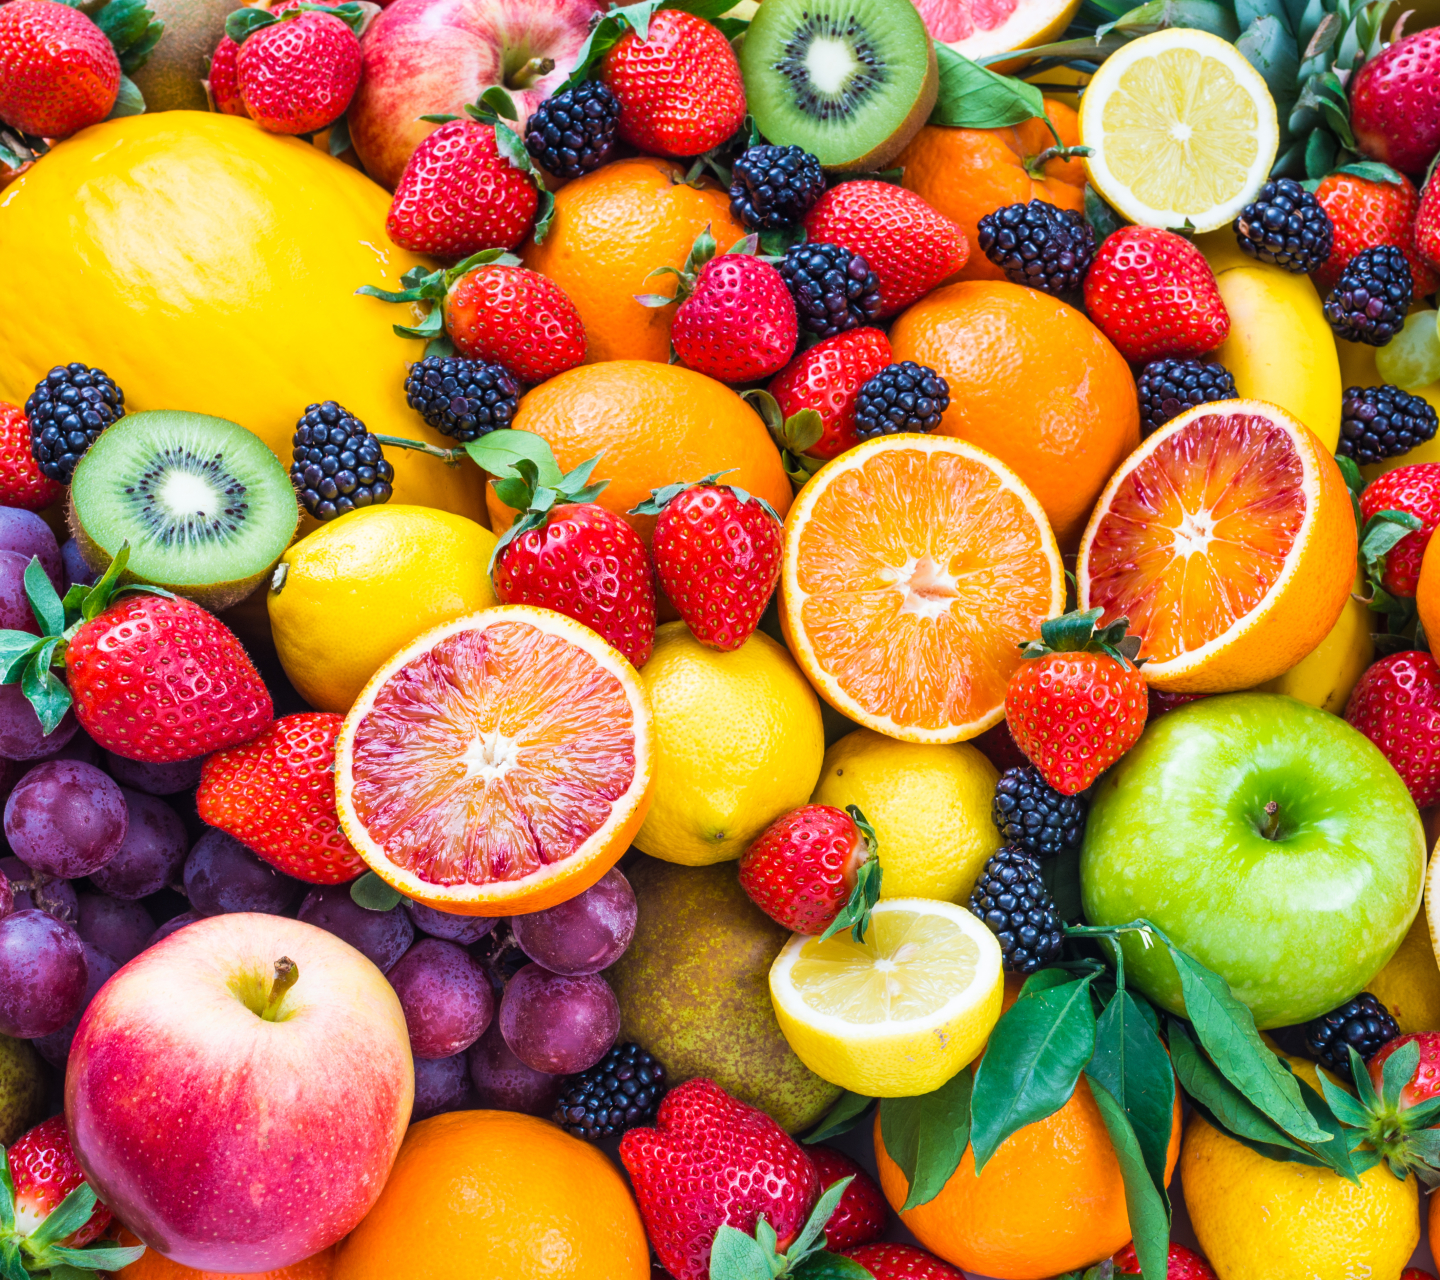 Descarga gratis la imagen Frutas, Fresa, Uvas, Kiwi, Mora, Limón, Fruta, Alimento, Color Naranja), Uva en el escritorio de tu PC